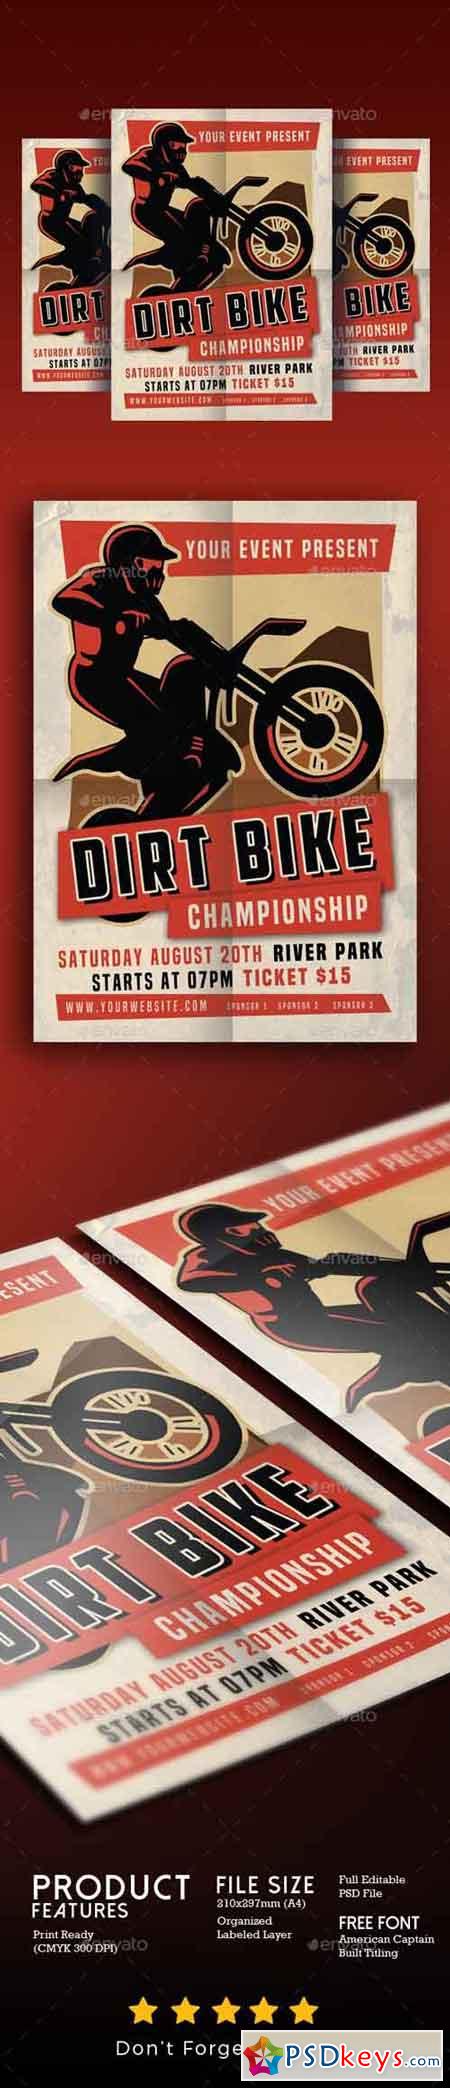 Dirt Bike Motorcross Championships Sports 17421981